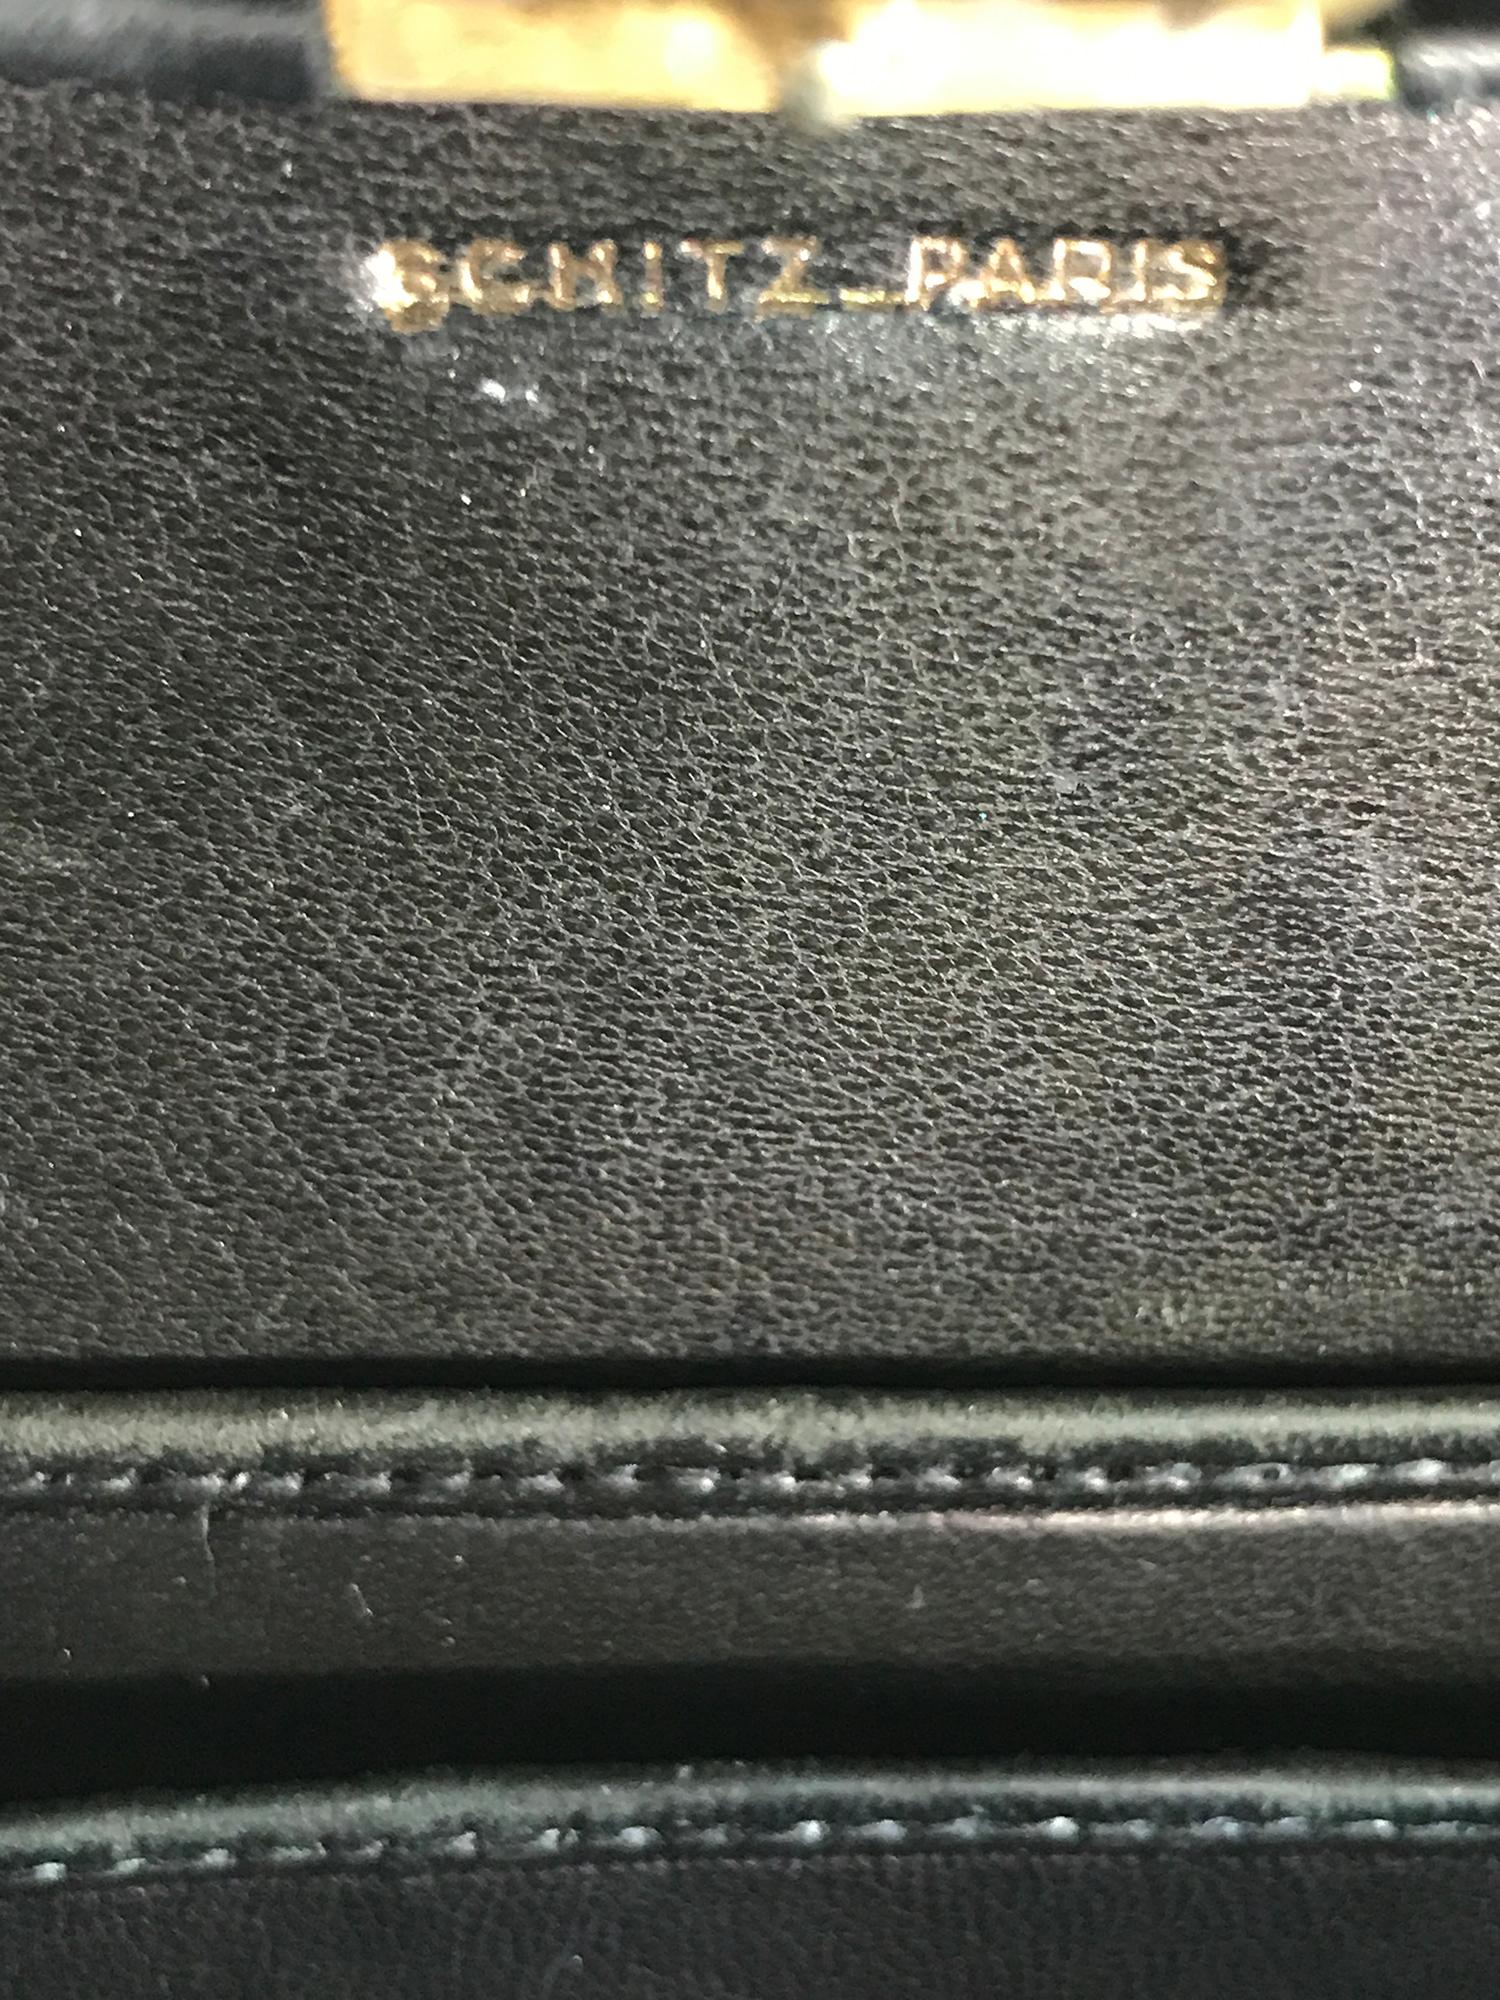 Schitz Paris Rare Black Crocodile Handbag with Gold Hardware 1953.  For Sale 3